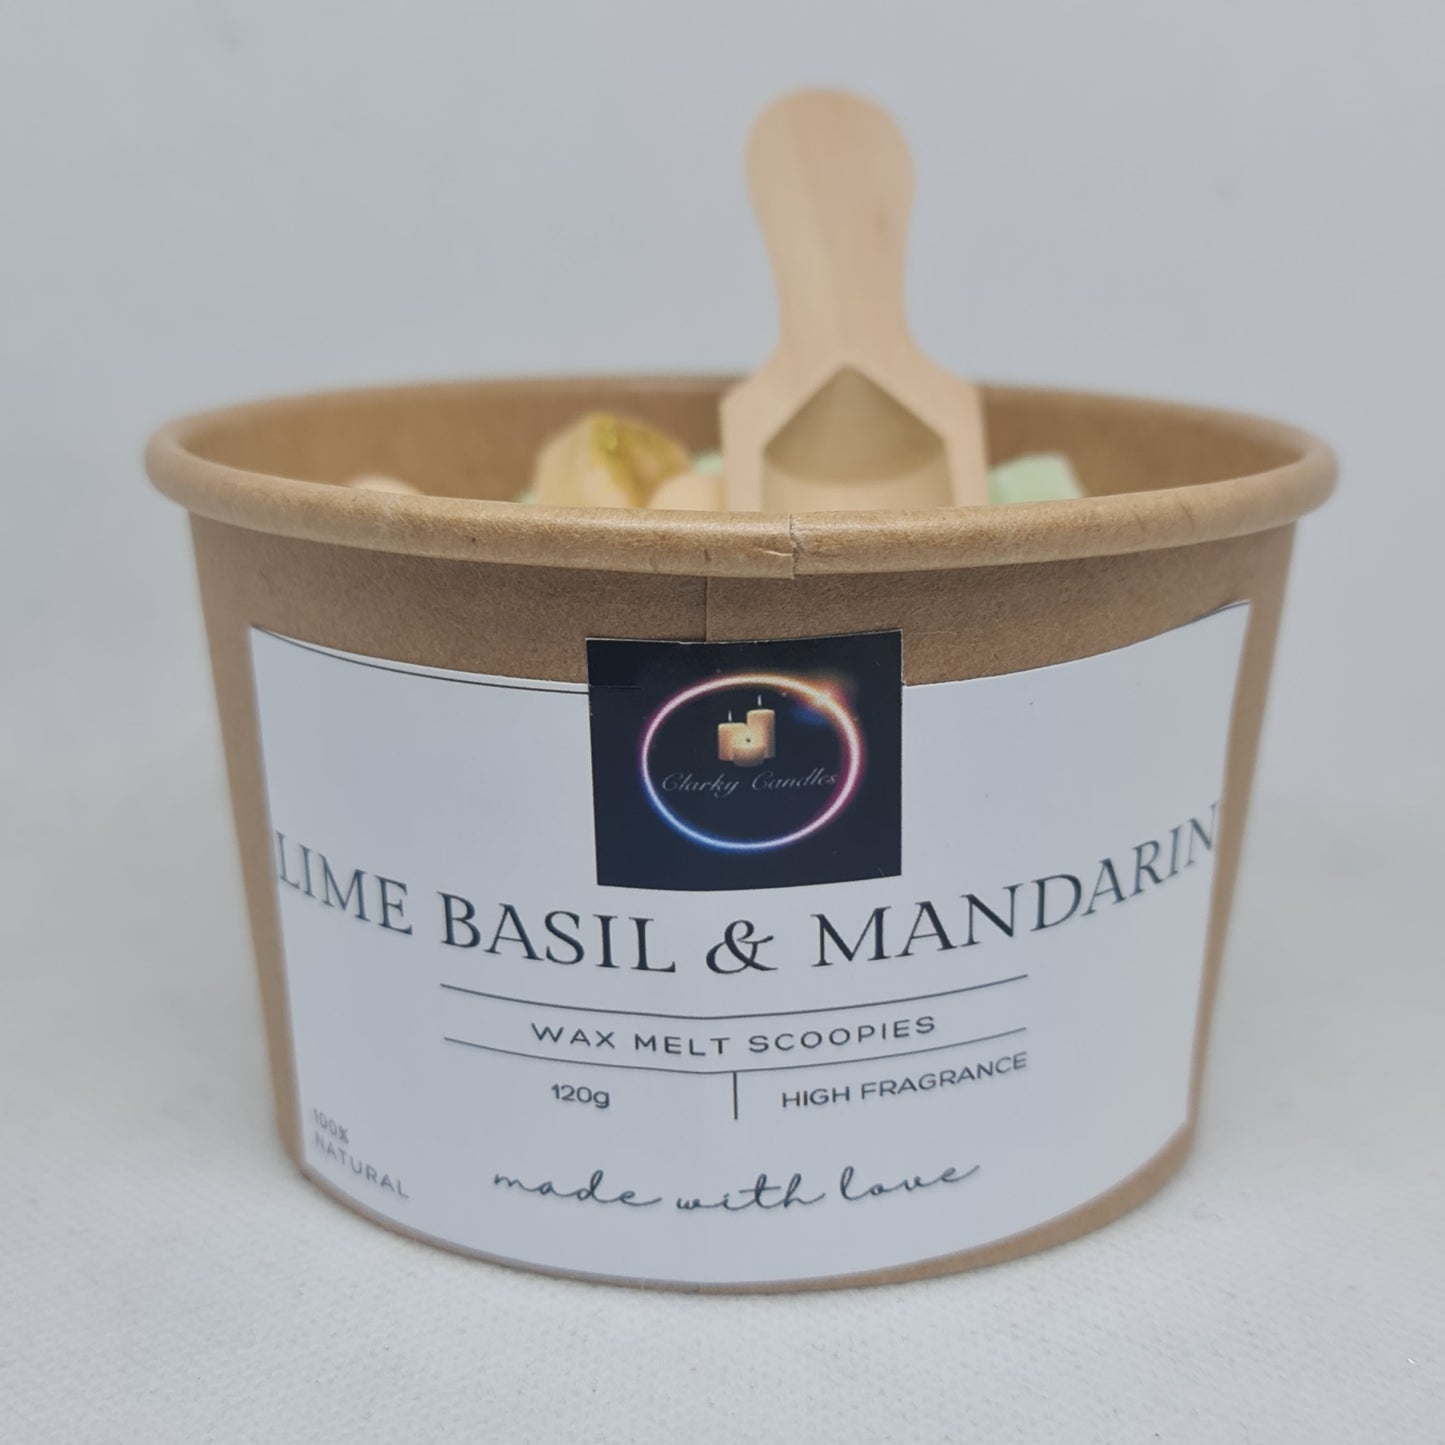 Lime Basil & Mandarin - Wax Melt Scoopies - 120g